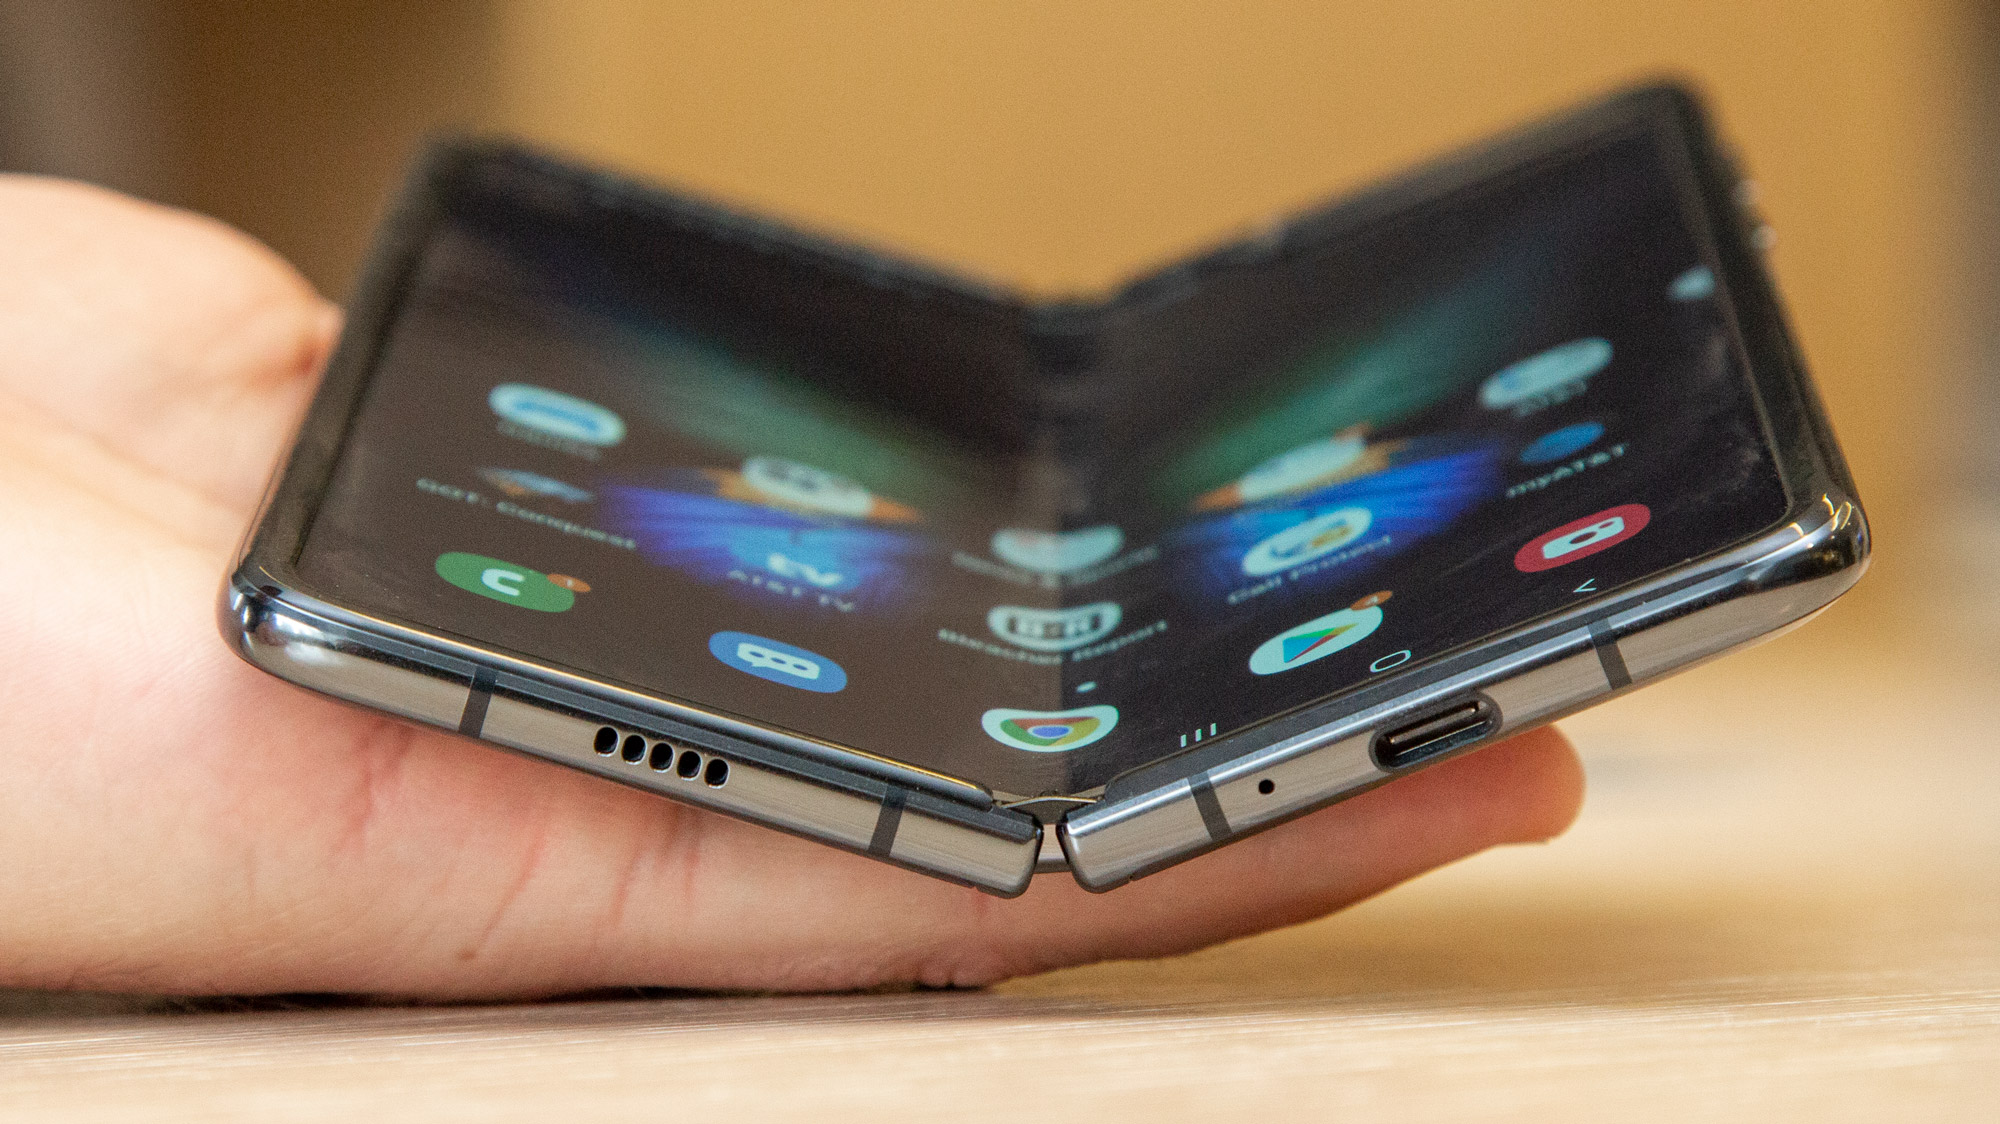 Samsung Galaxy Z Fold 2 Размеры